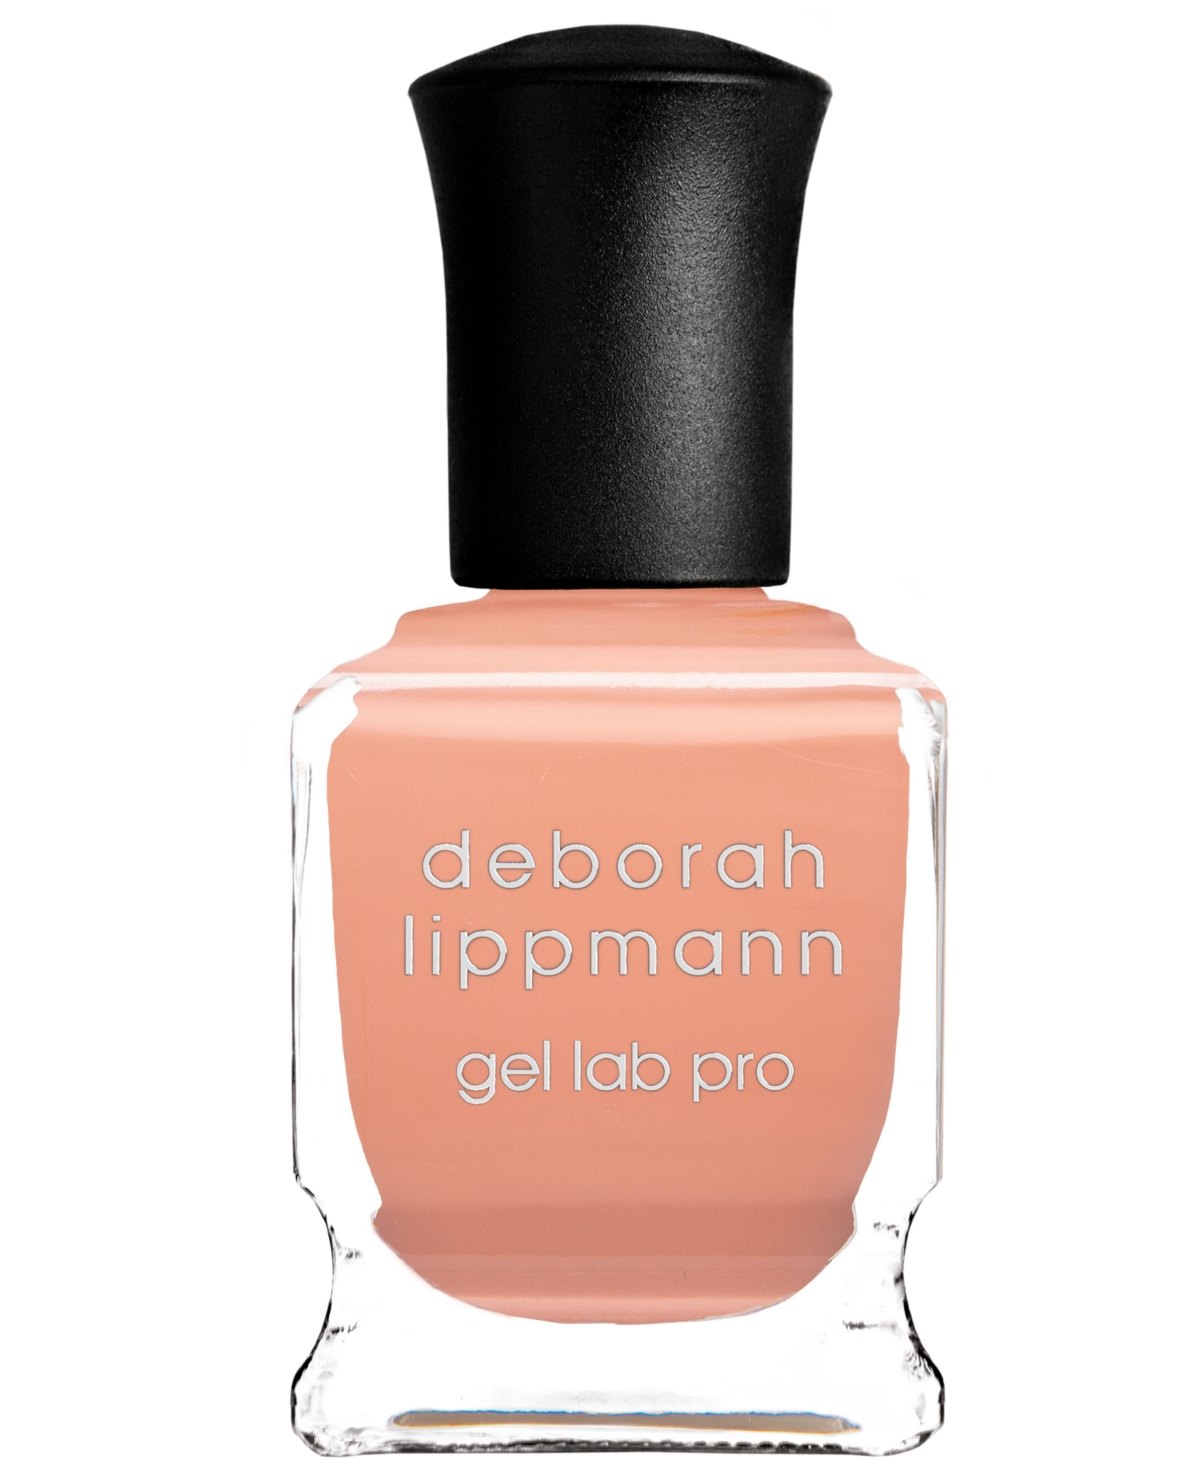 Deborah Lippmann Gel Lab Pro Nail Polish In Everytime We Touch